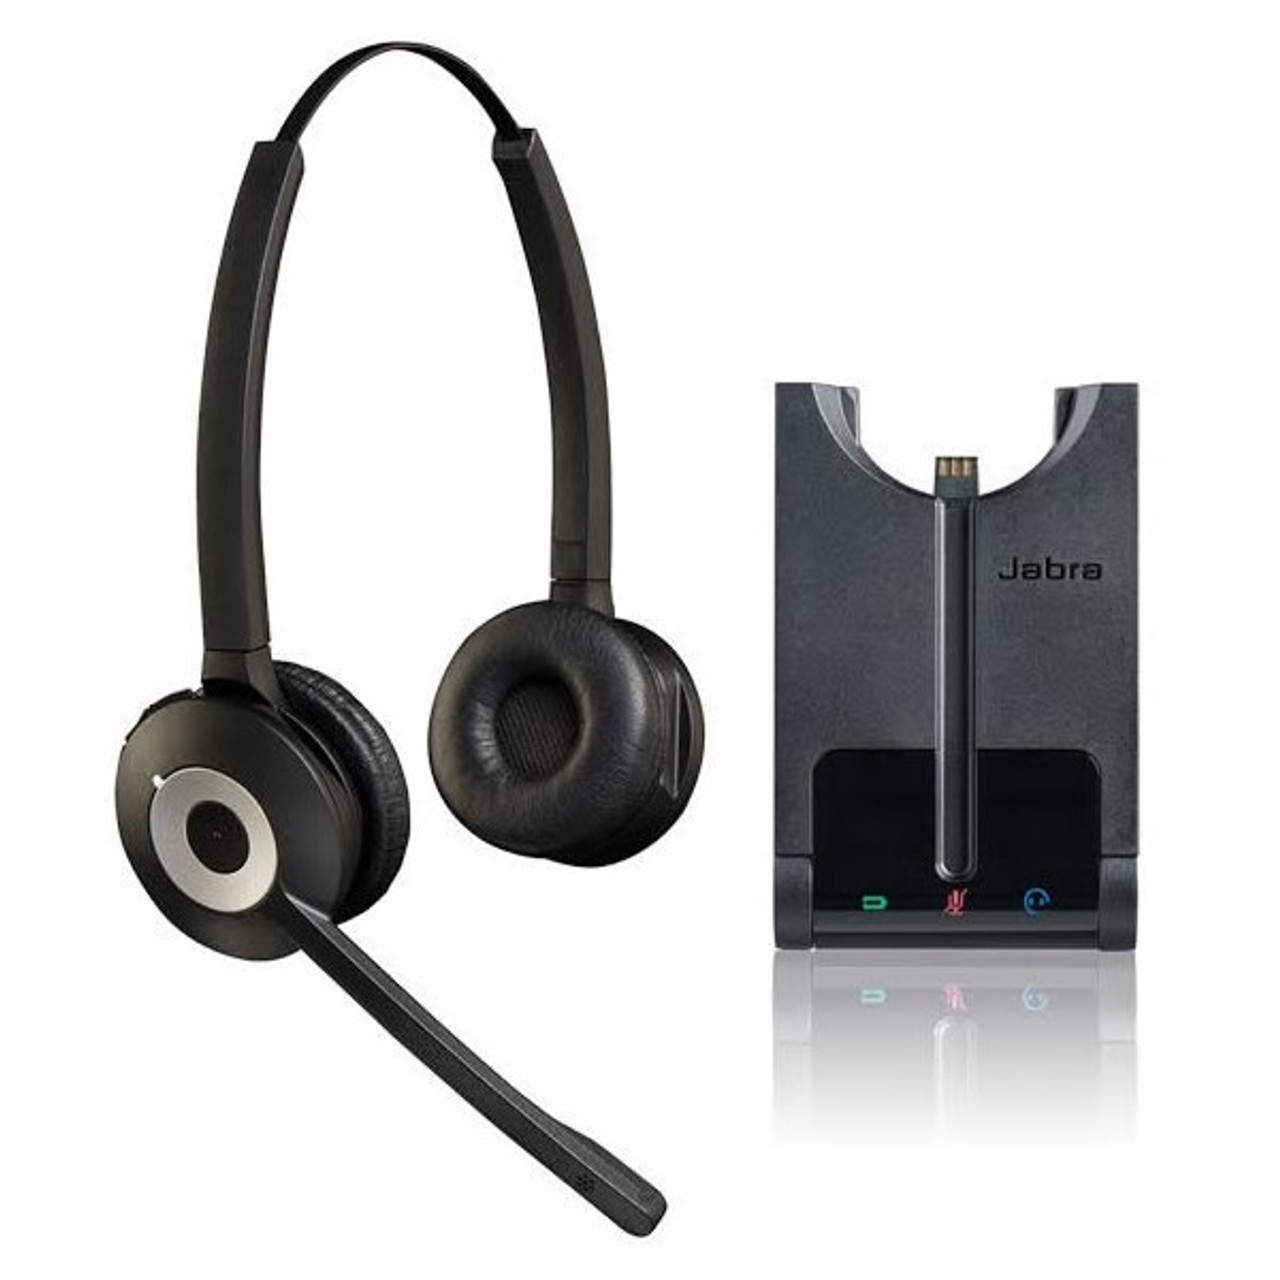 Unify (Siemens) Optiset E Advance Plus Phone Wireless Headset - PRO920Duo